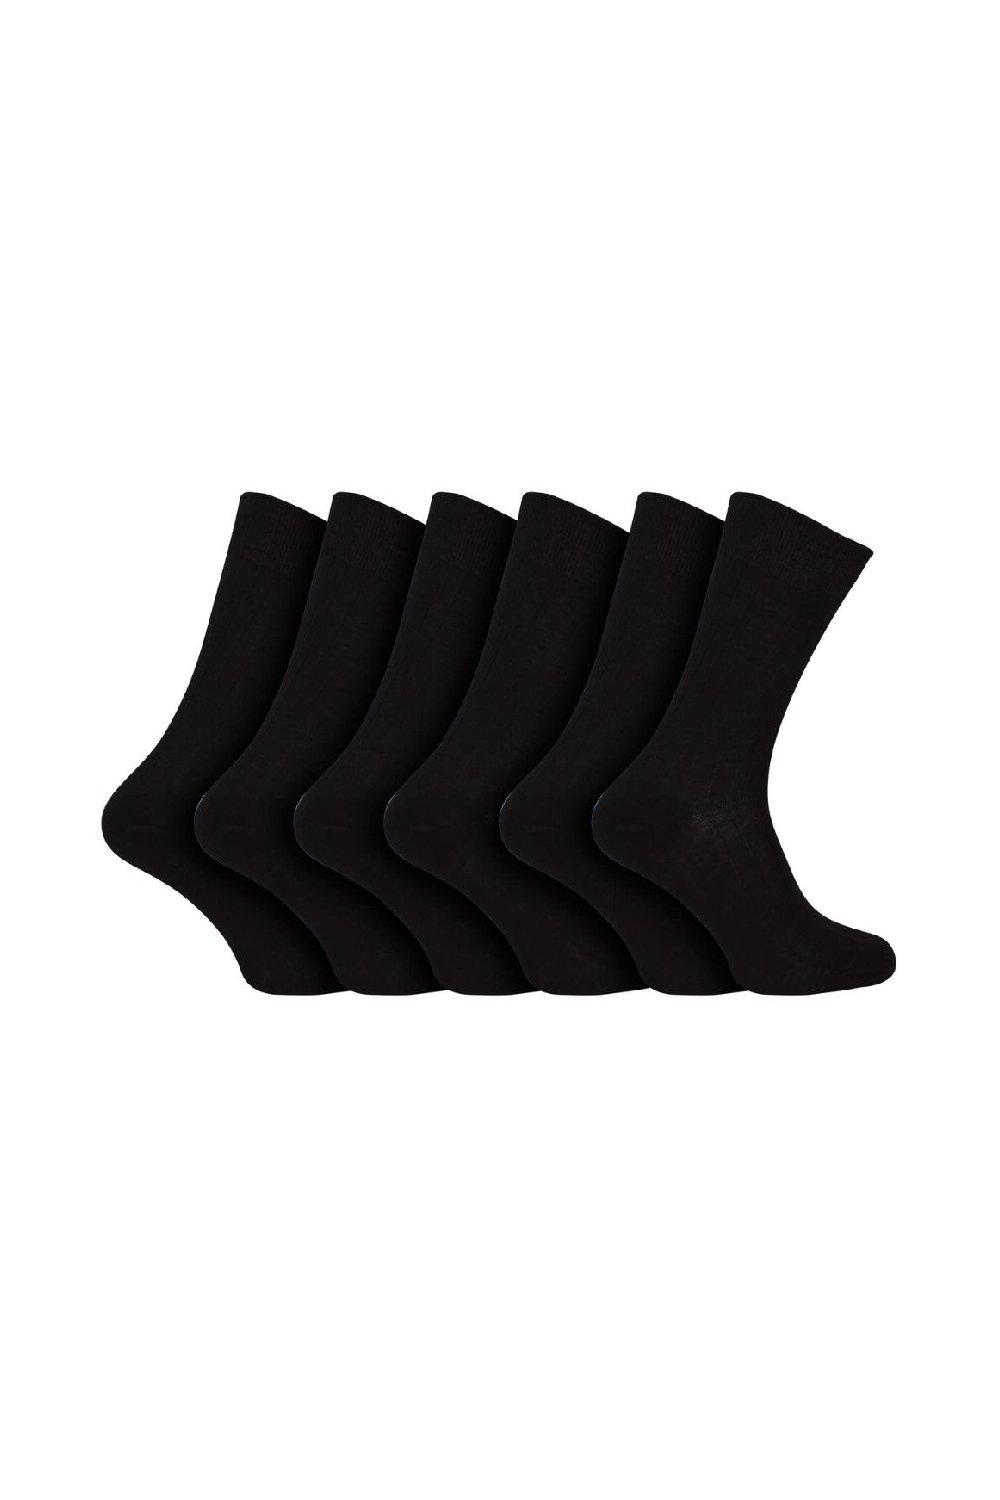 6 Pairs Ribbed Seamless100% Egyptian Cotton Socks